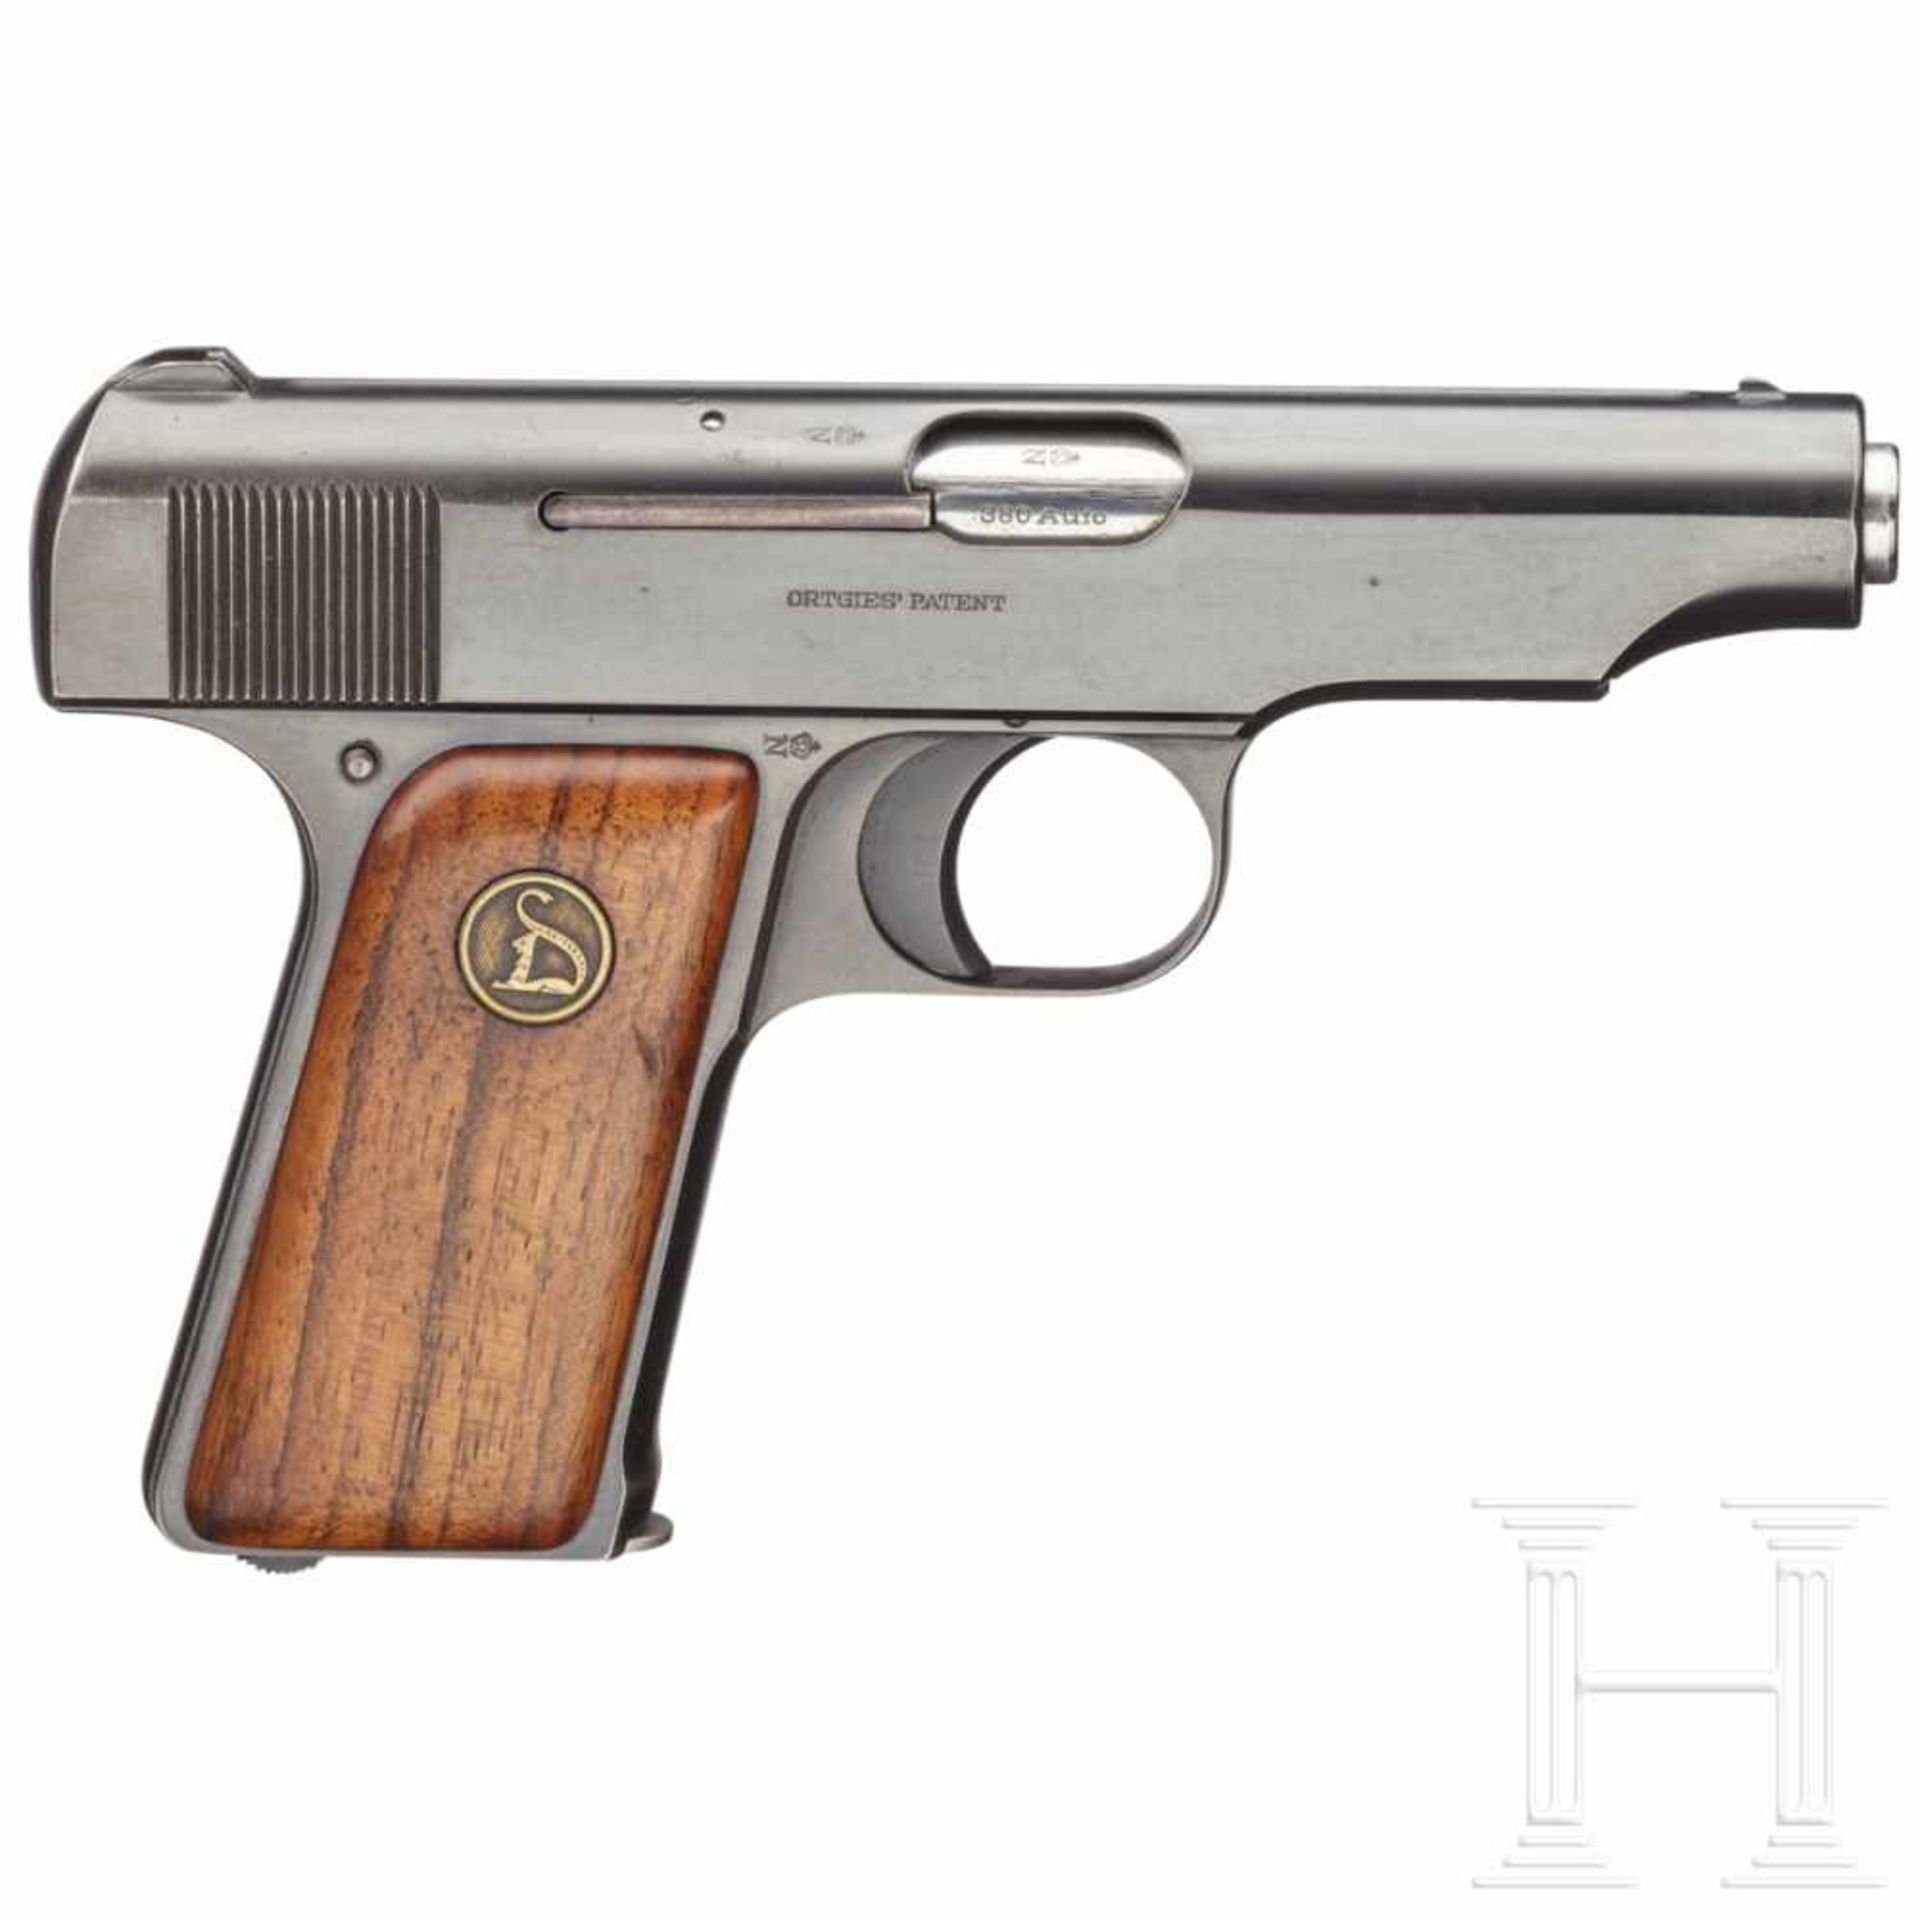 An Ortgies pistol in cal. 9 mm short, export model with holsterKal. 9 mm Brown. kurz, Nr. 141551, - Bild 2 aus 4